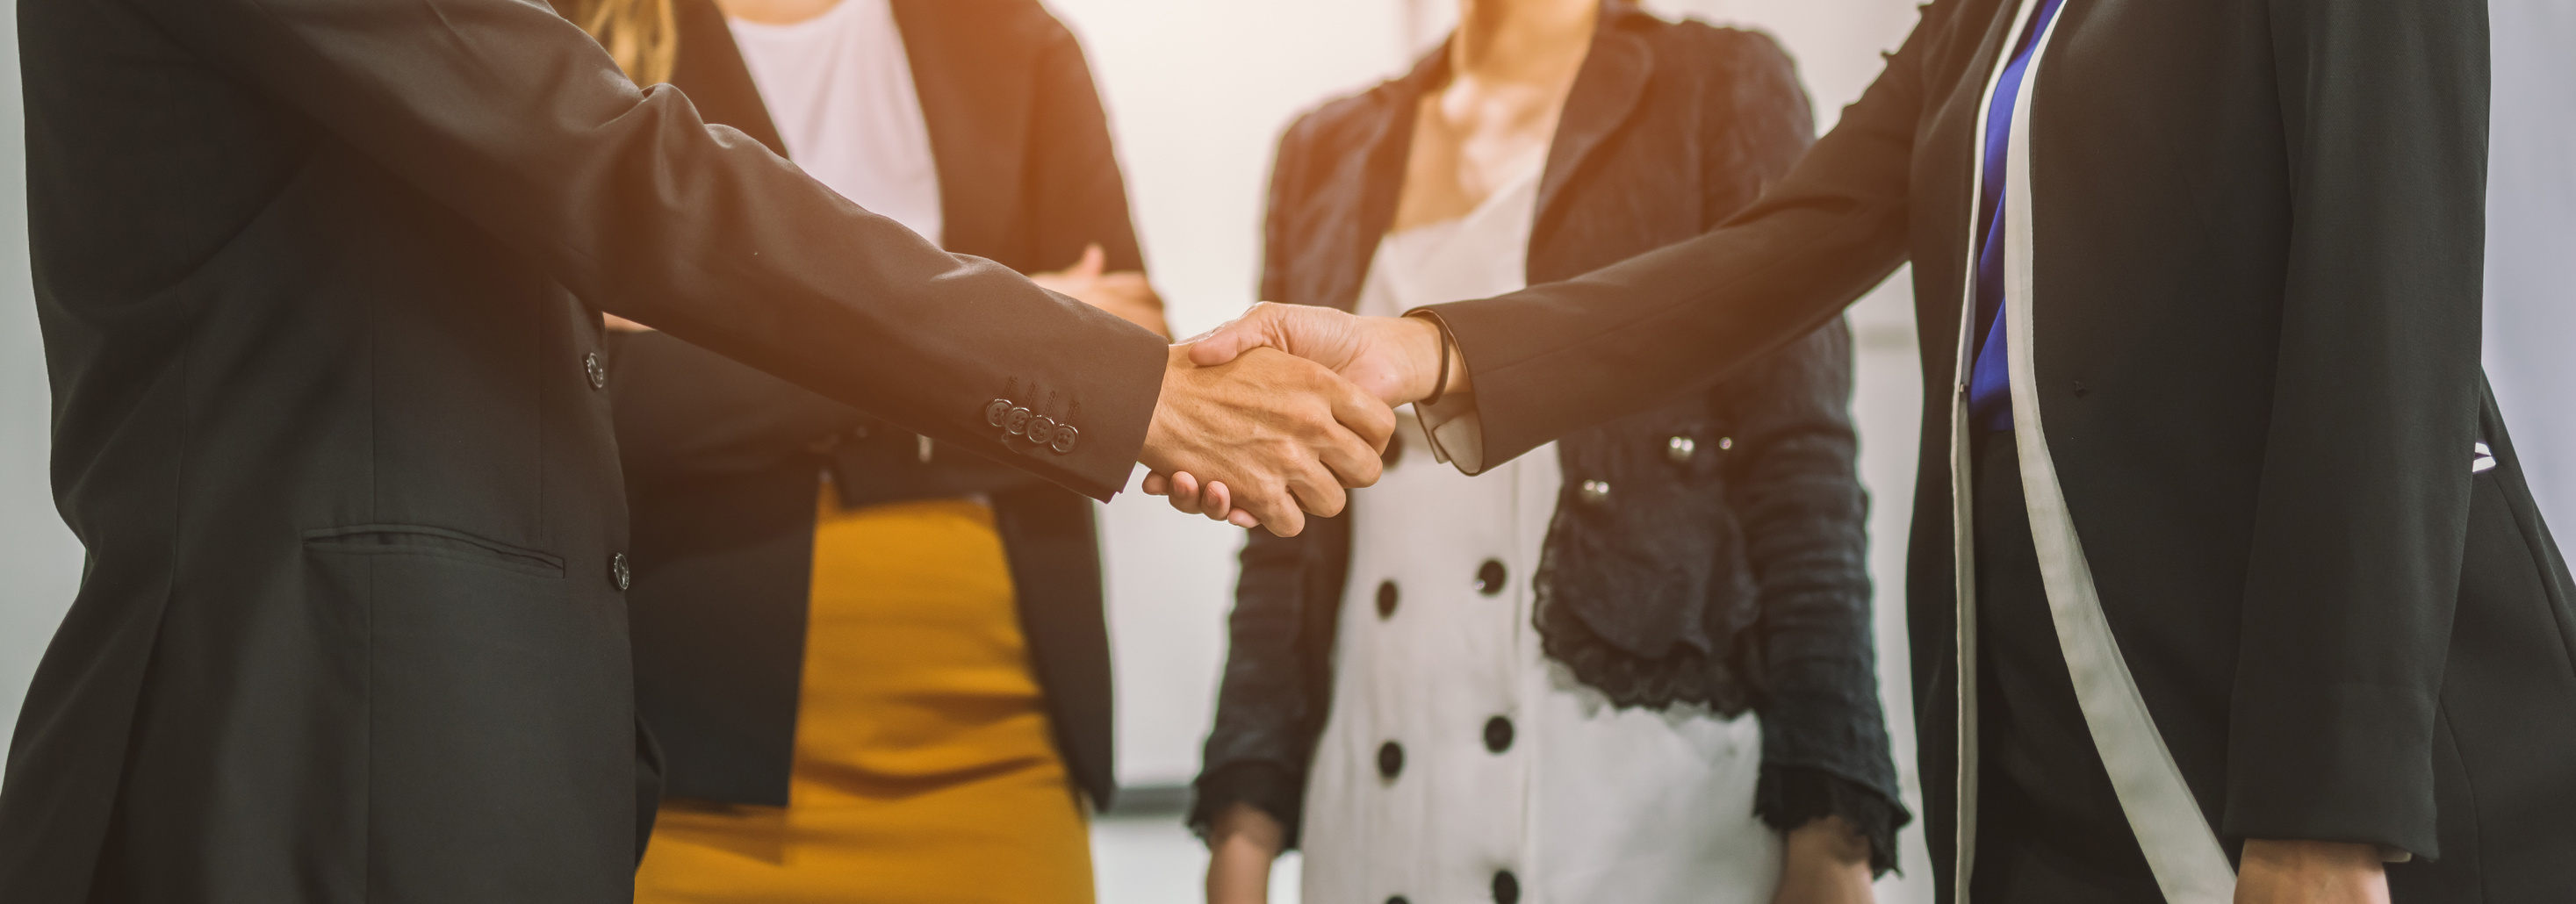 Business people partnership handshake